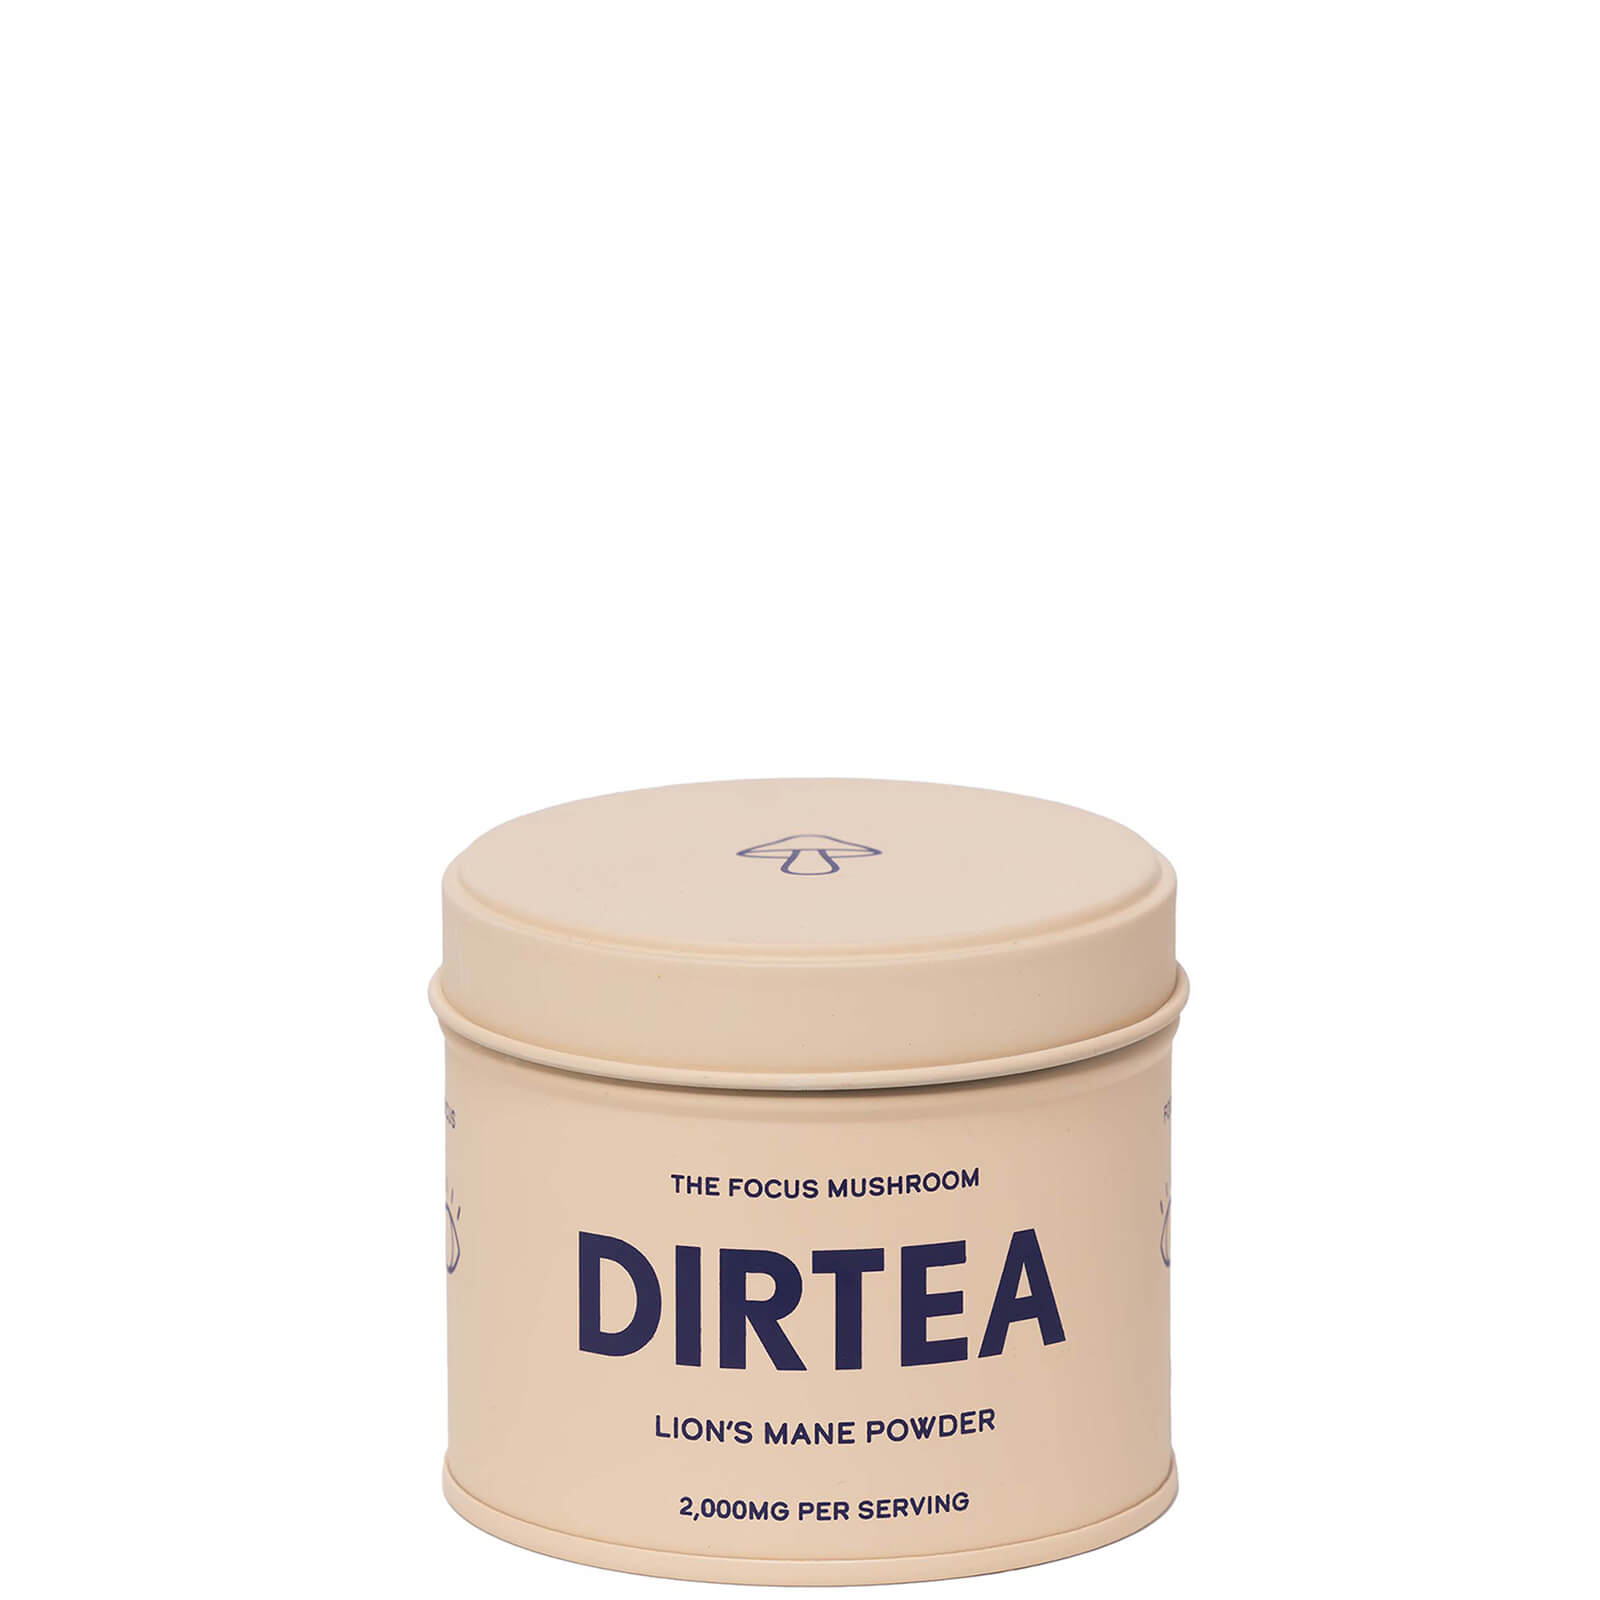 Dirtea Lion's Mane Powder - The Focus Mushroom 60g In White